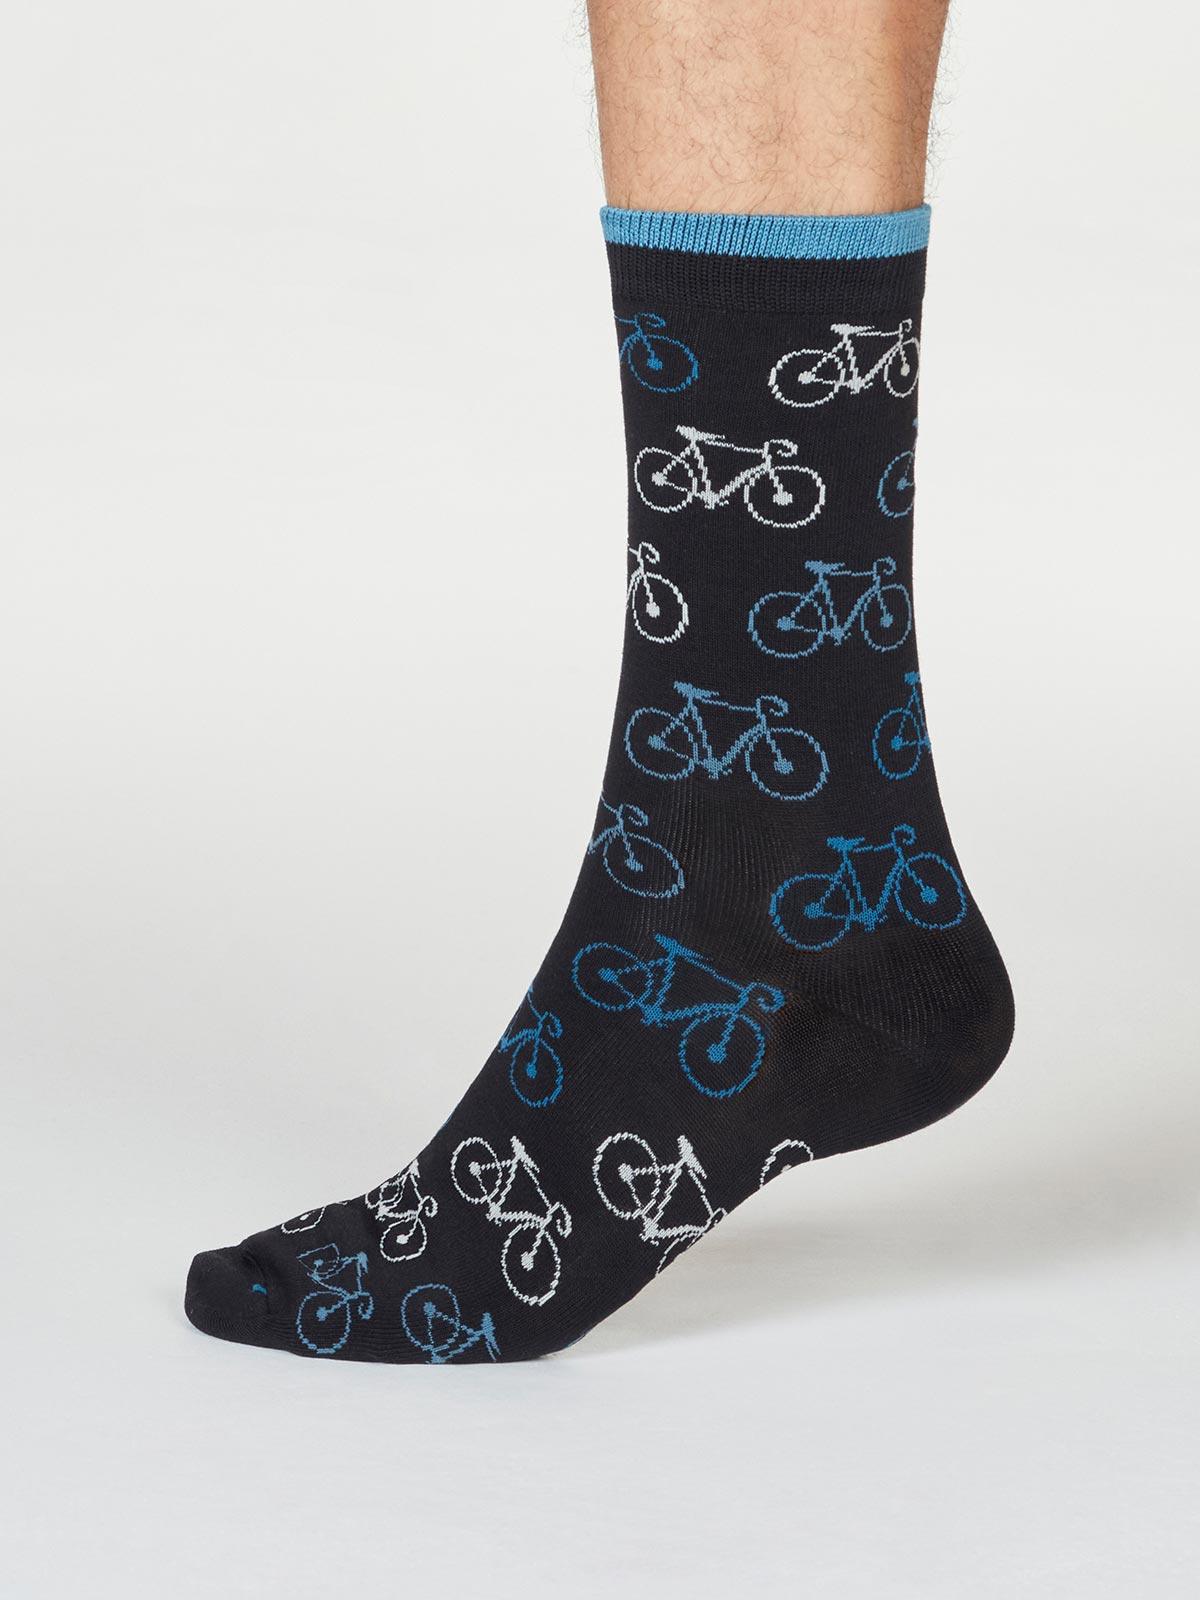 Benrus Bike Socks In A Bag - Multi - Thought Clothing UK